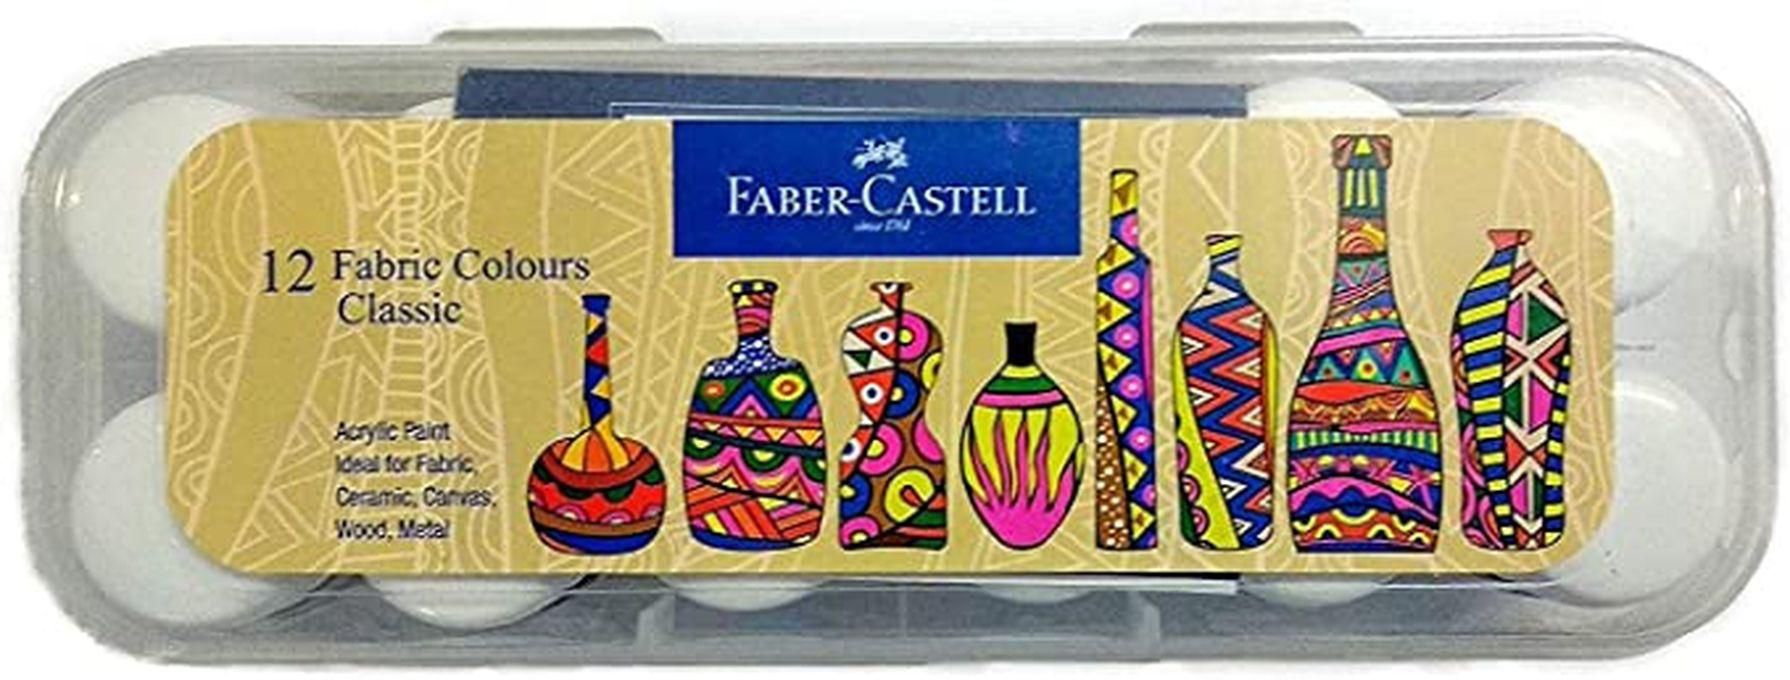 Faber Castell Faber Castell طقم الوان قماش برطمان علبه بلاستيك 6 لون